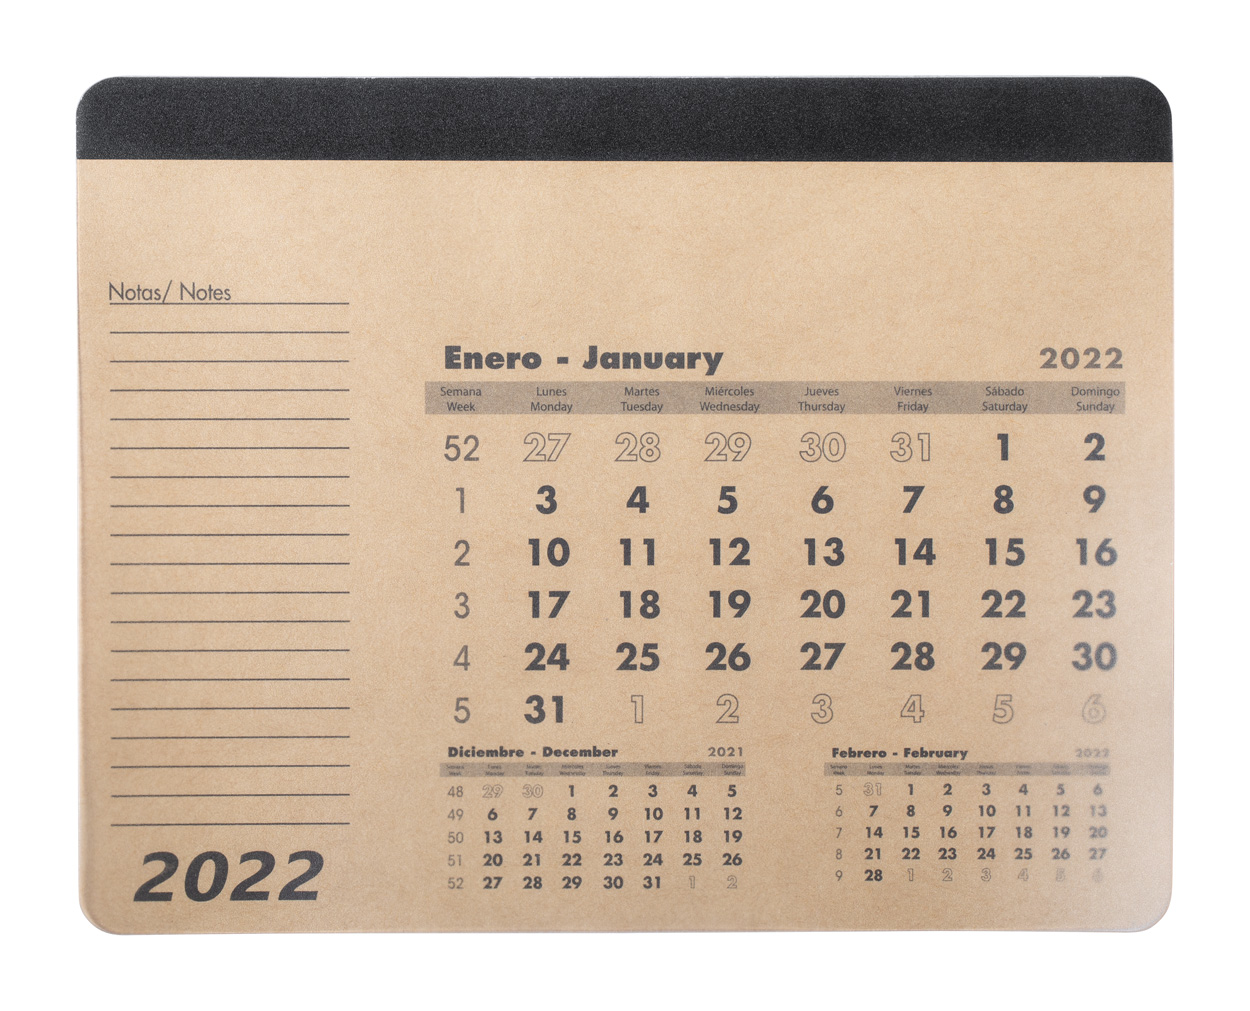 Flen mouse pad calendar